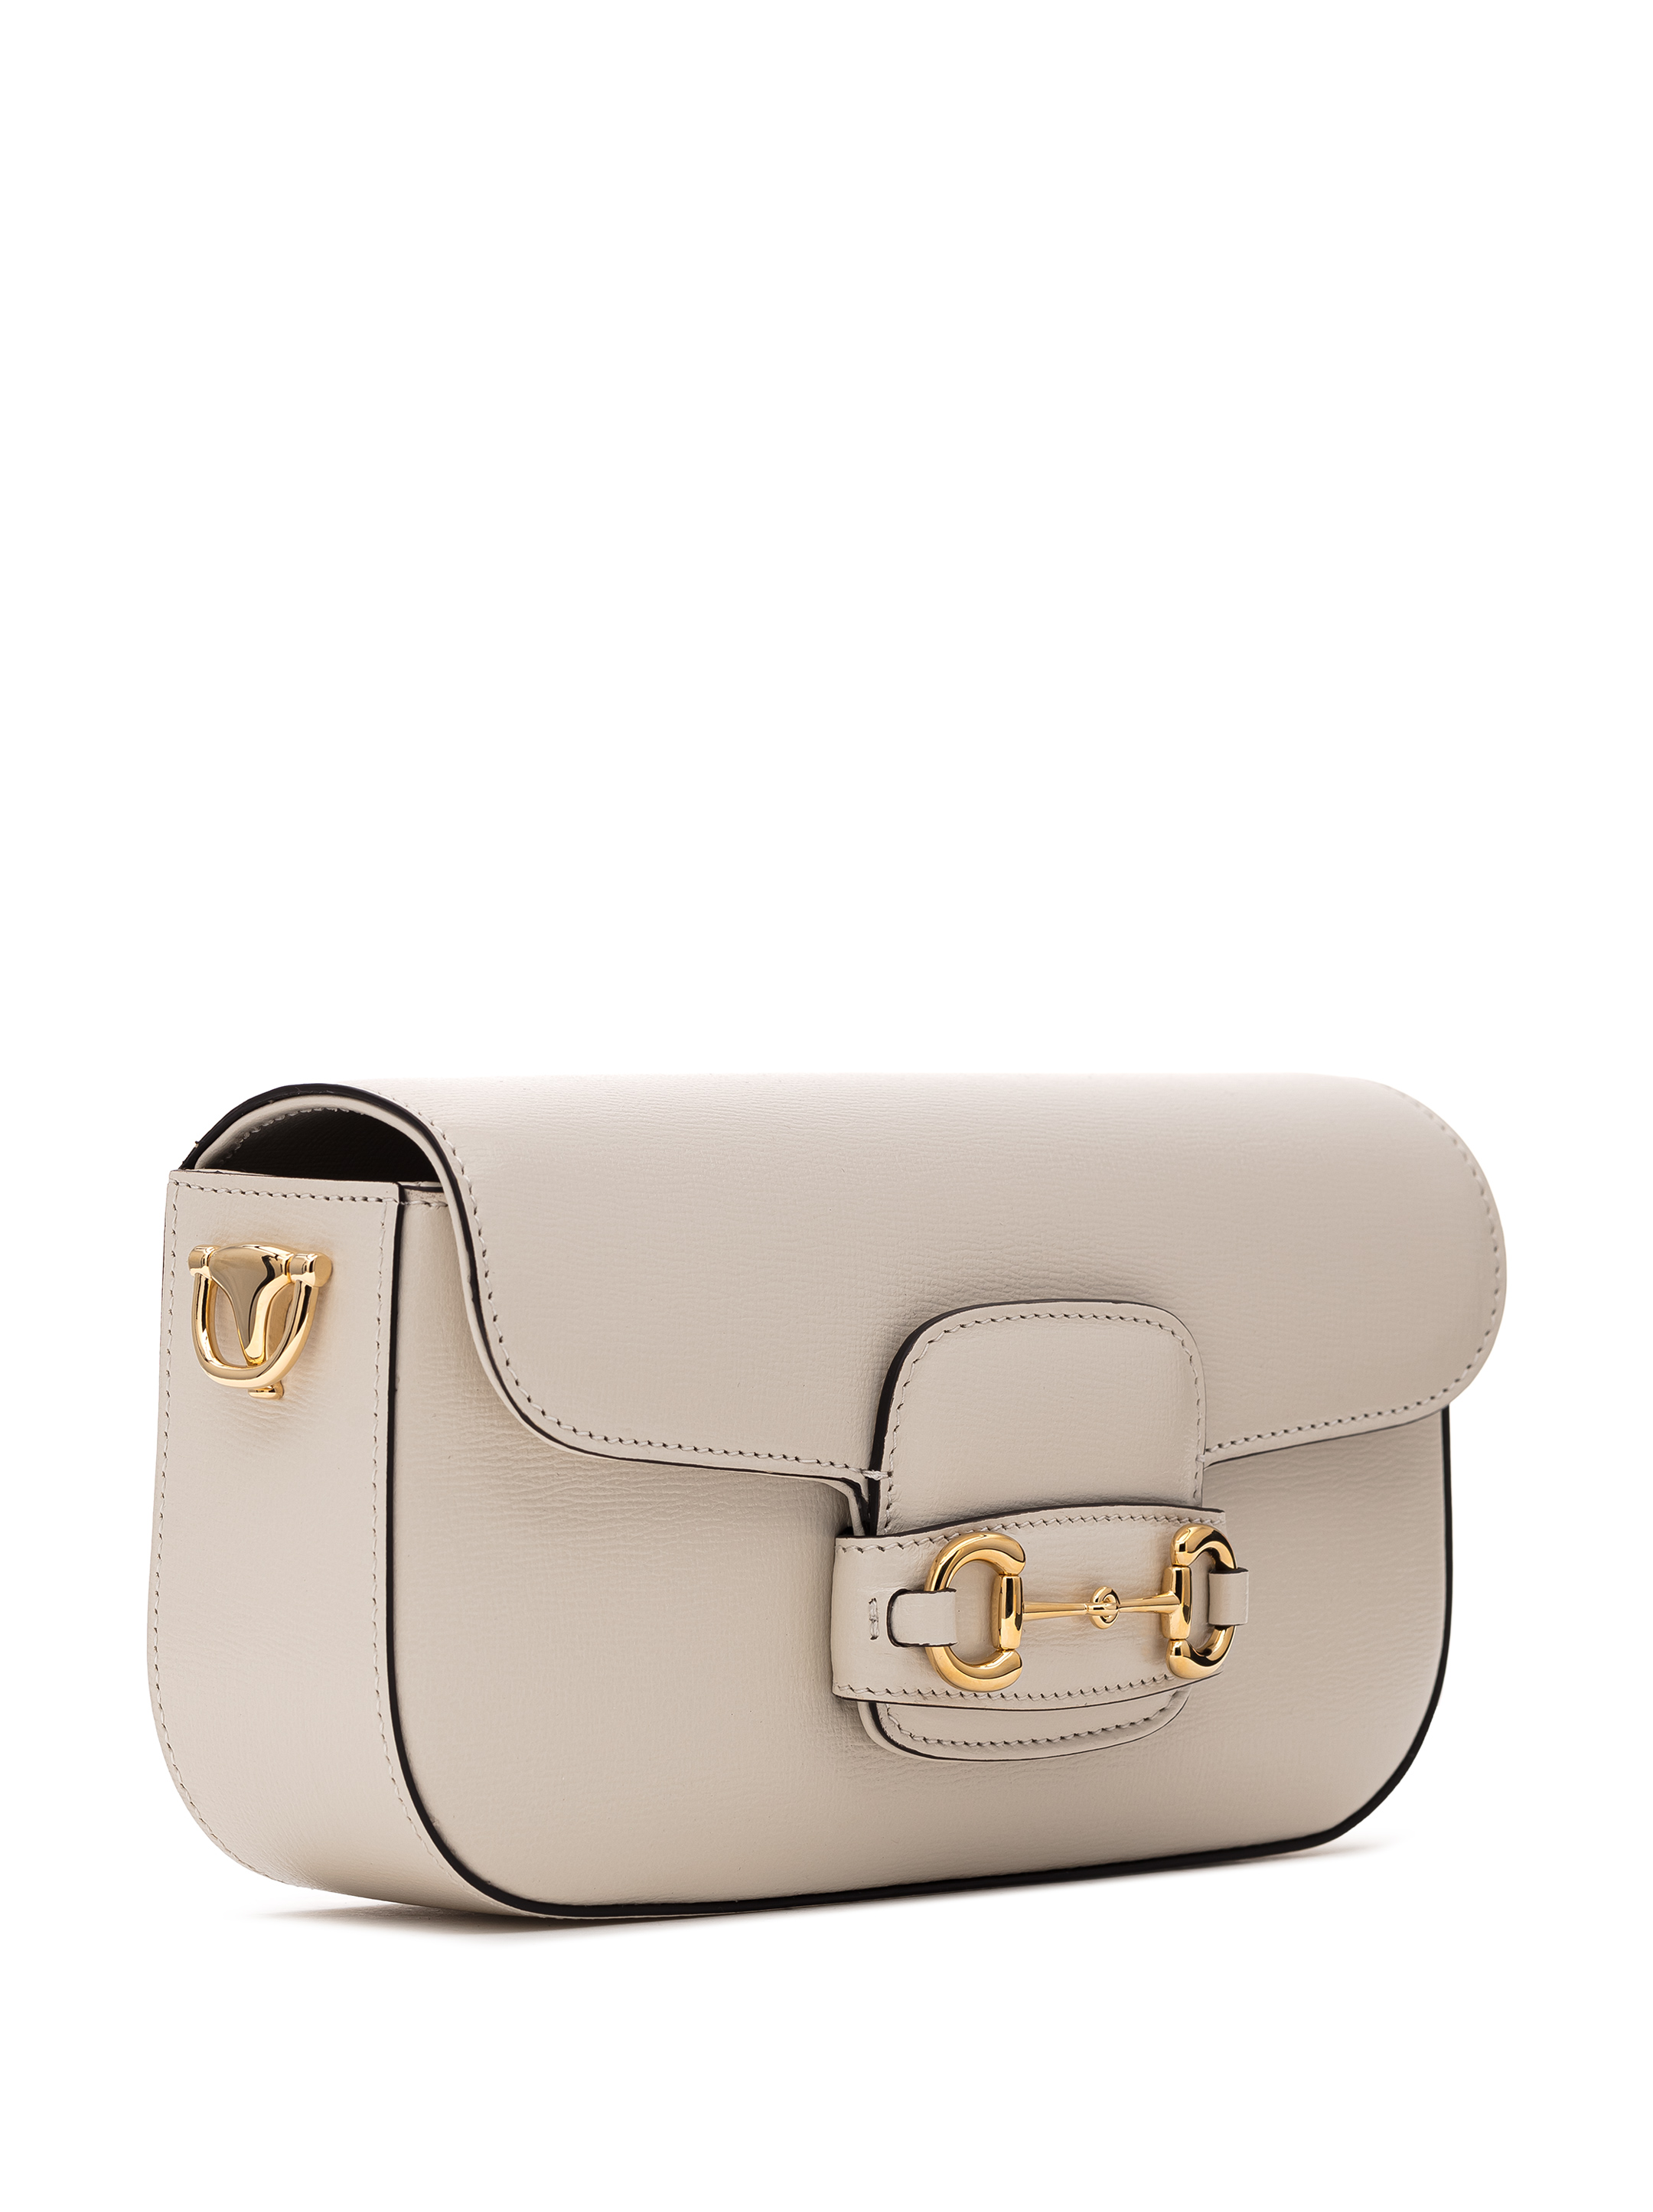 Gucci Horsebit 1955 Shoulder Bag – The Luxury Lady